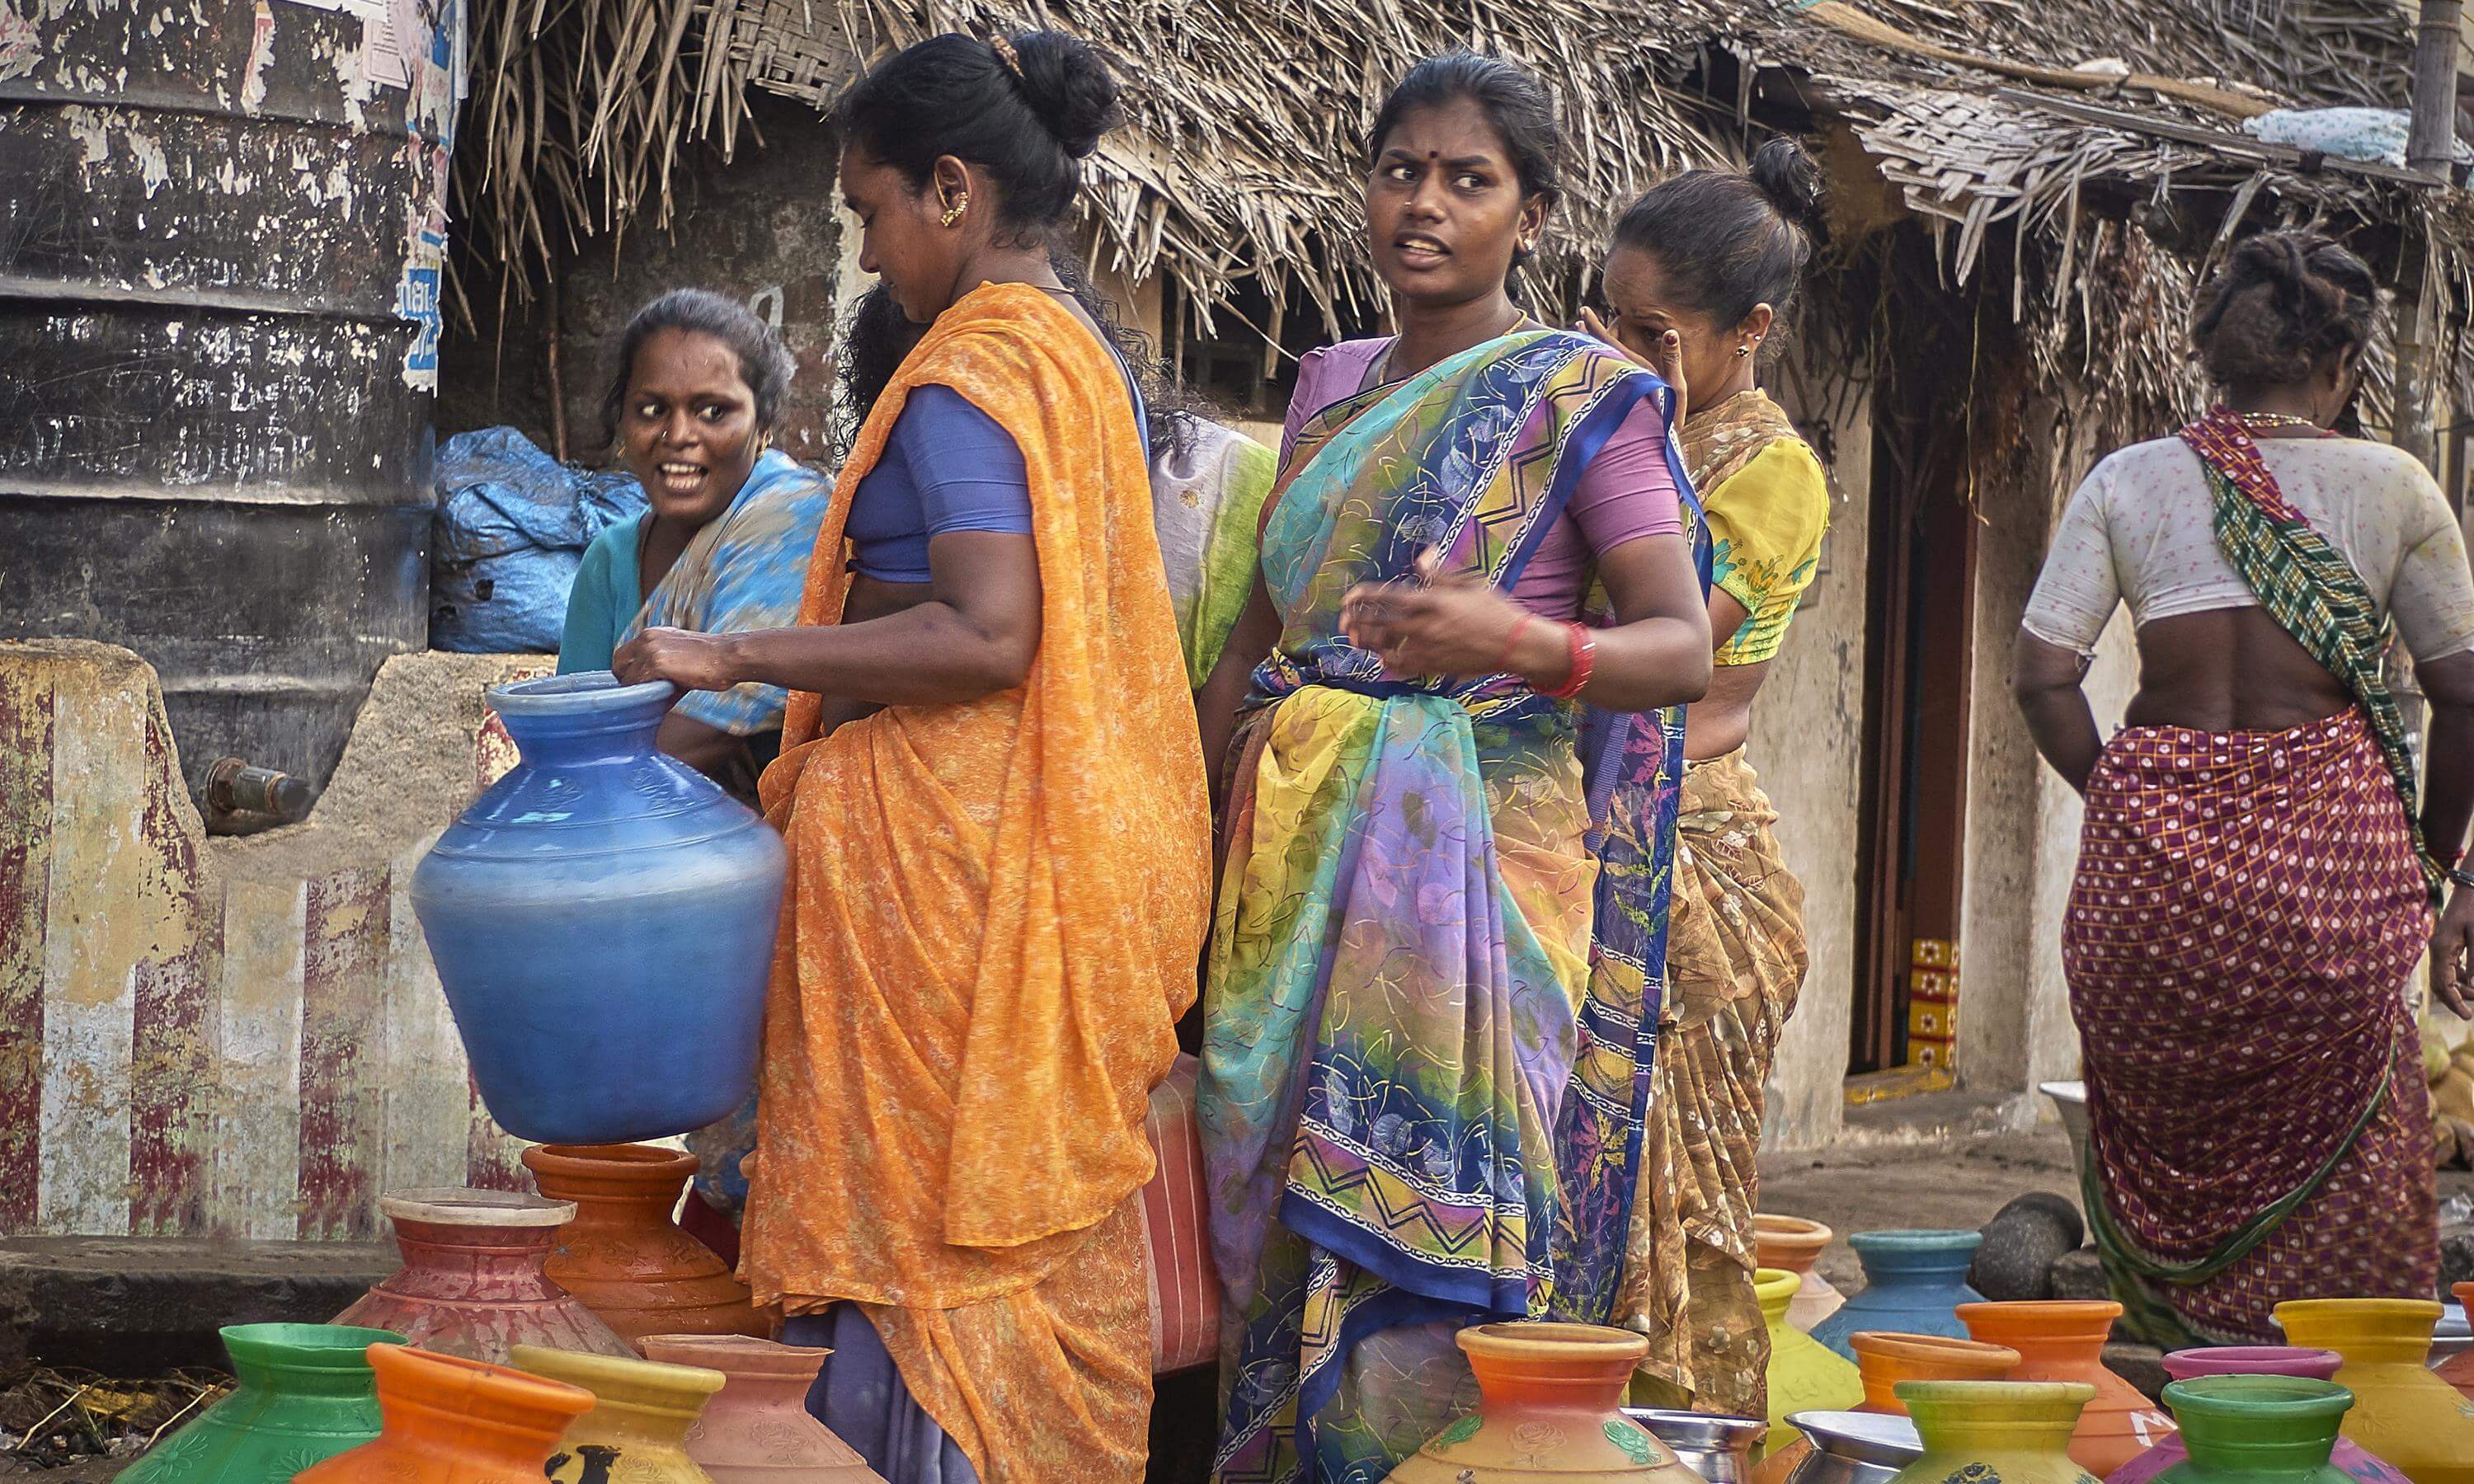 Indian women carry water in jugs